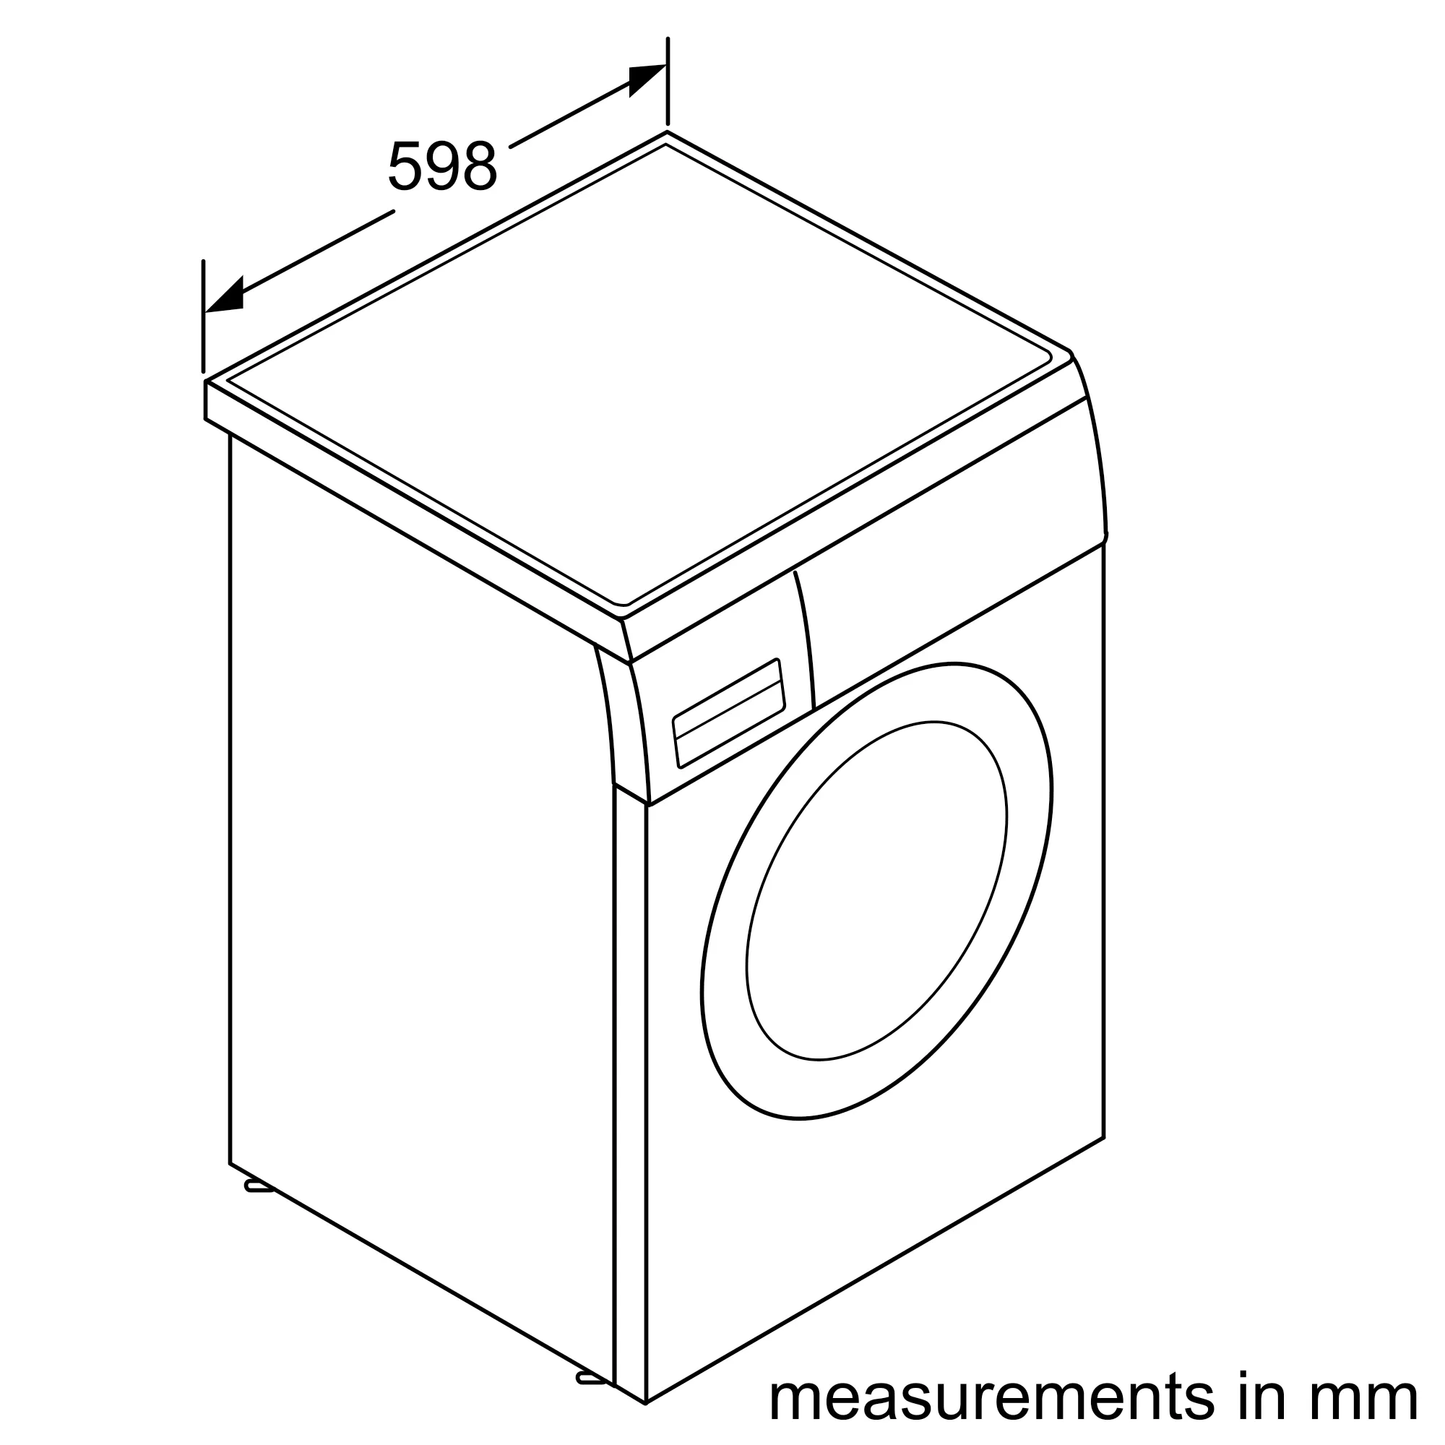 BOSCH WUU28460HK Front Loading Washing Machine (Built under available) - Series 6 博西 獨立式洗衣機 可飛頂 台底安裝 | 廚房電器 | 家電 |